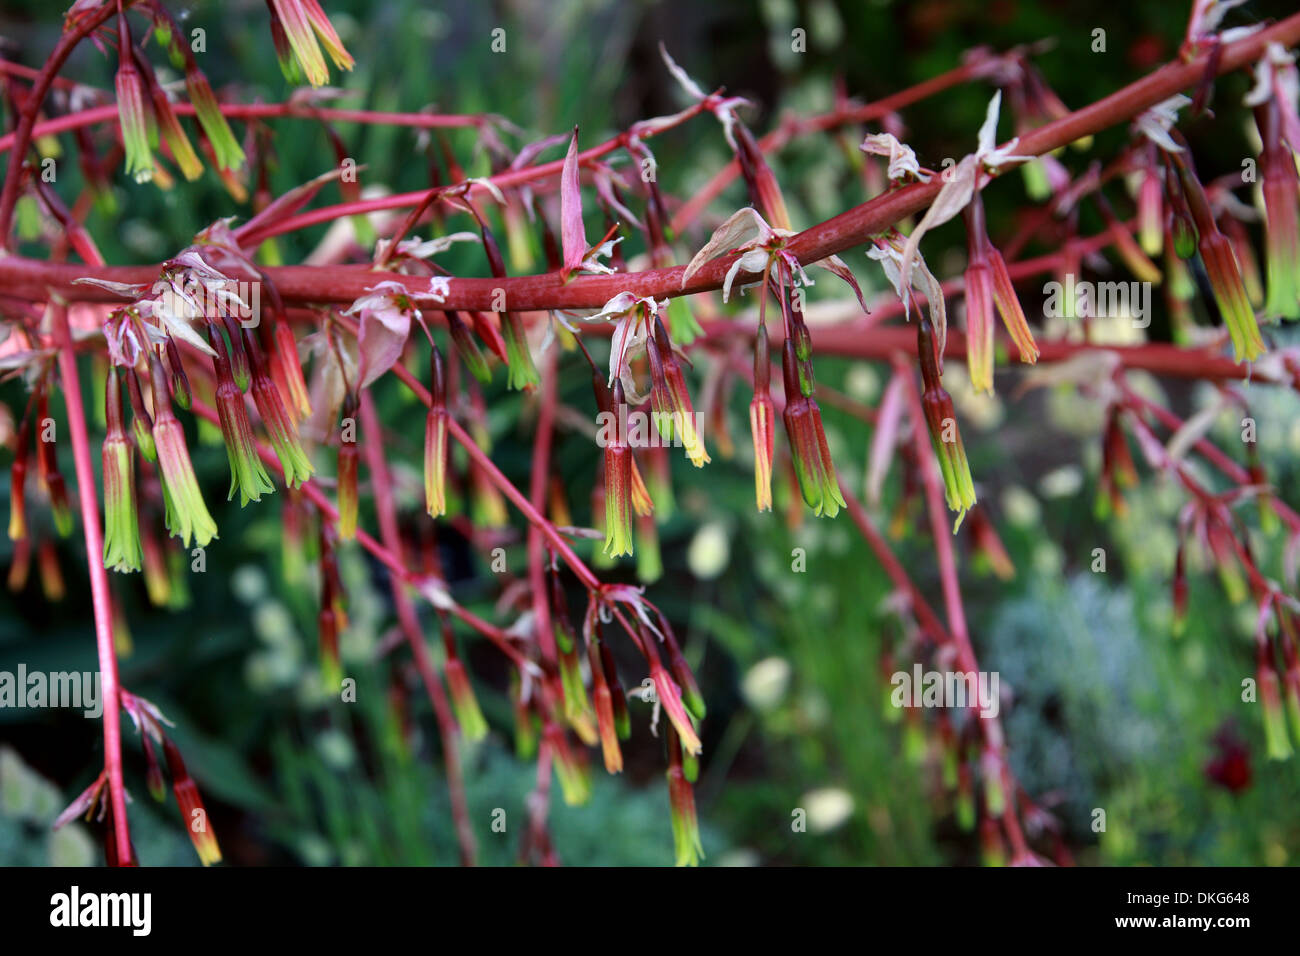 Giglio messicano, messicano False Red Yucca, Amole, Sisi, Beschorneria yuccoides, agavaceae. Syn. Beschorneria superba. Foto Stock